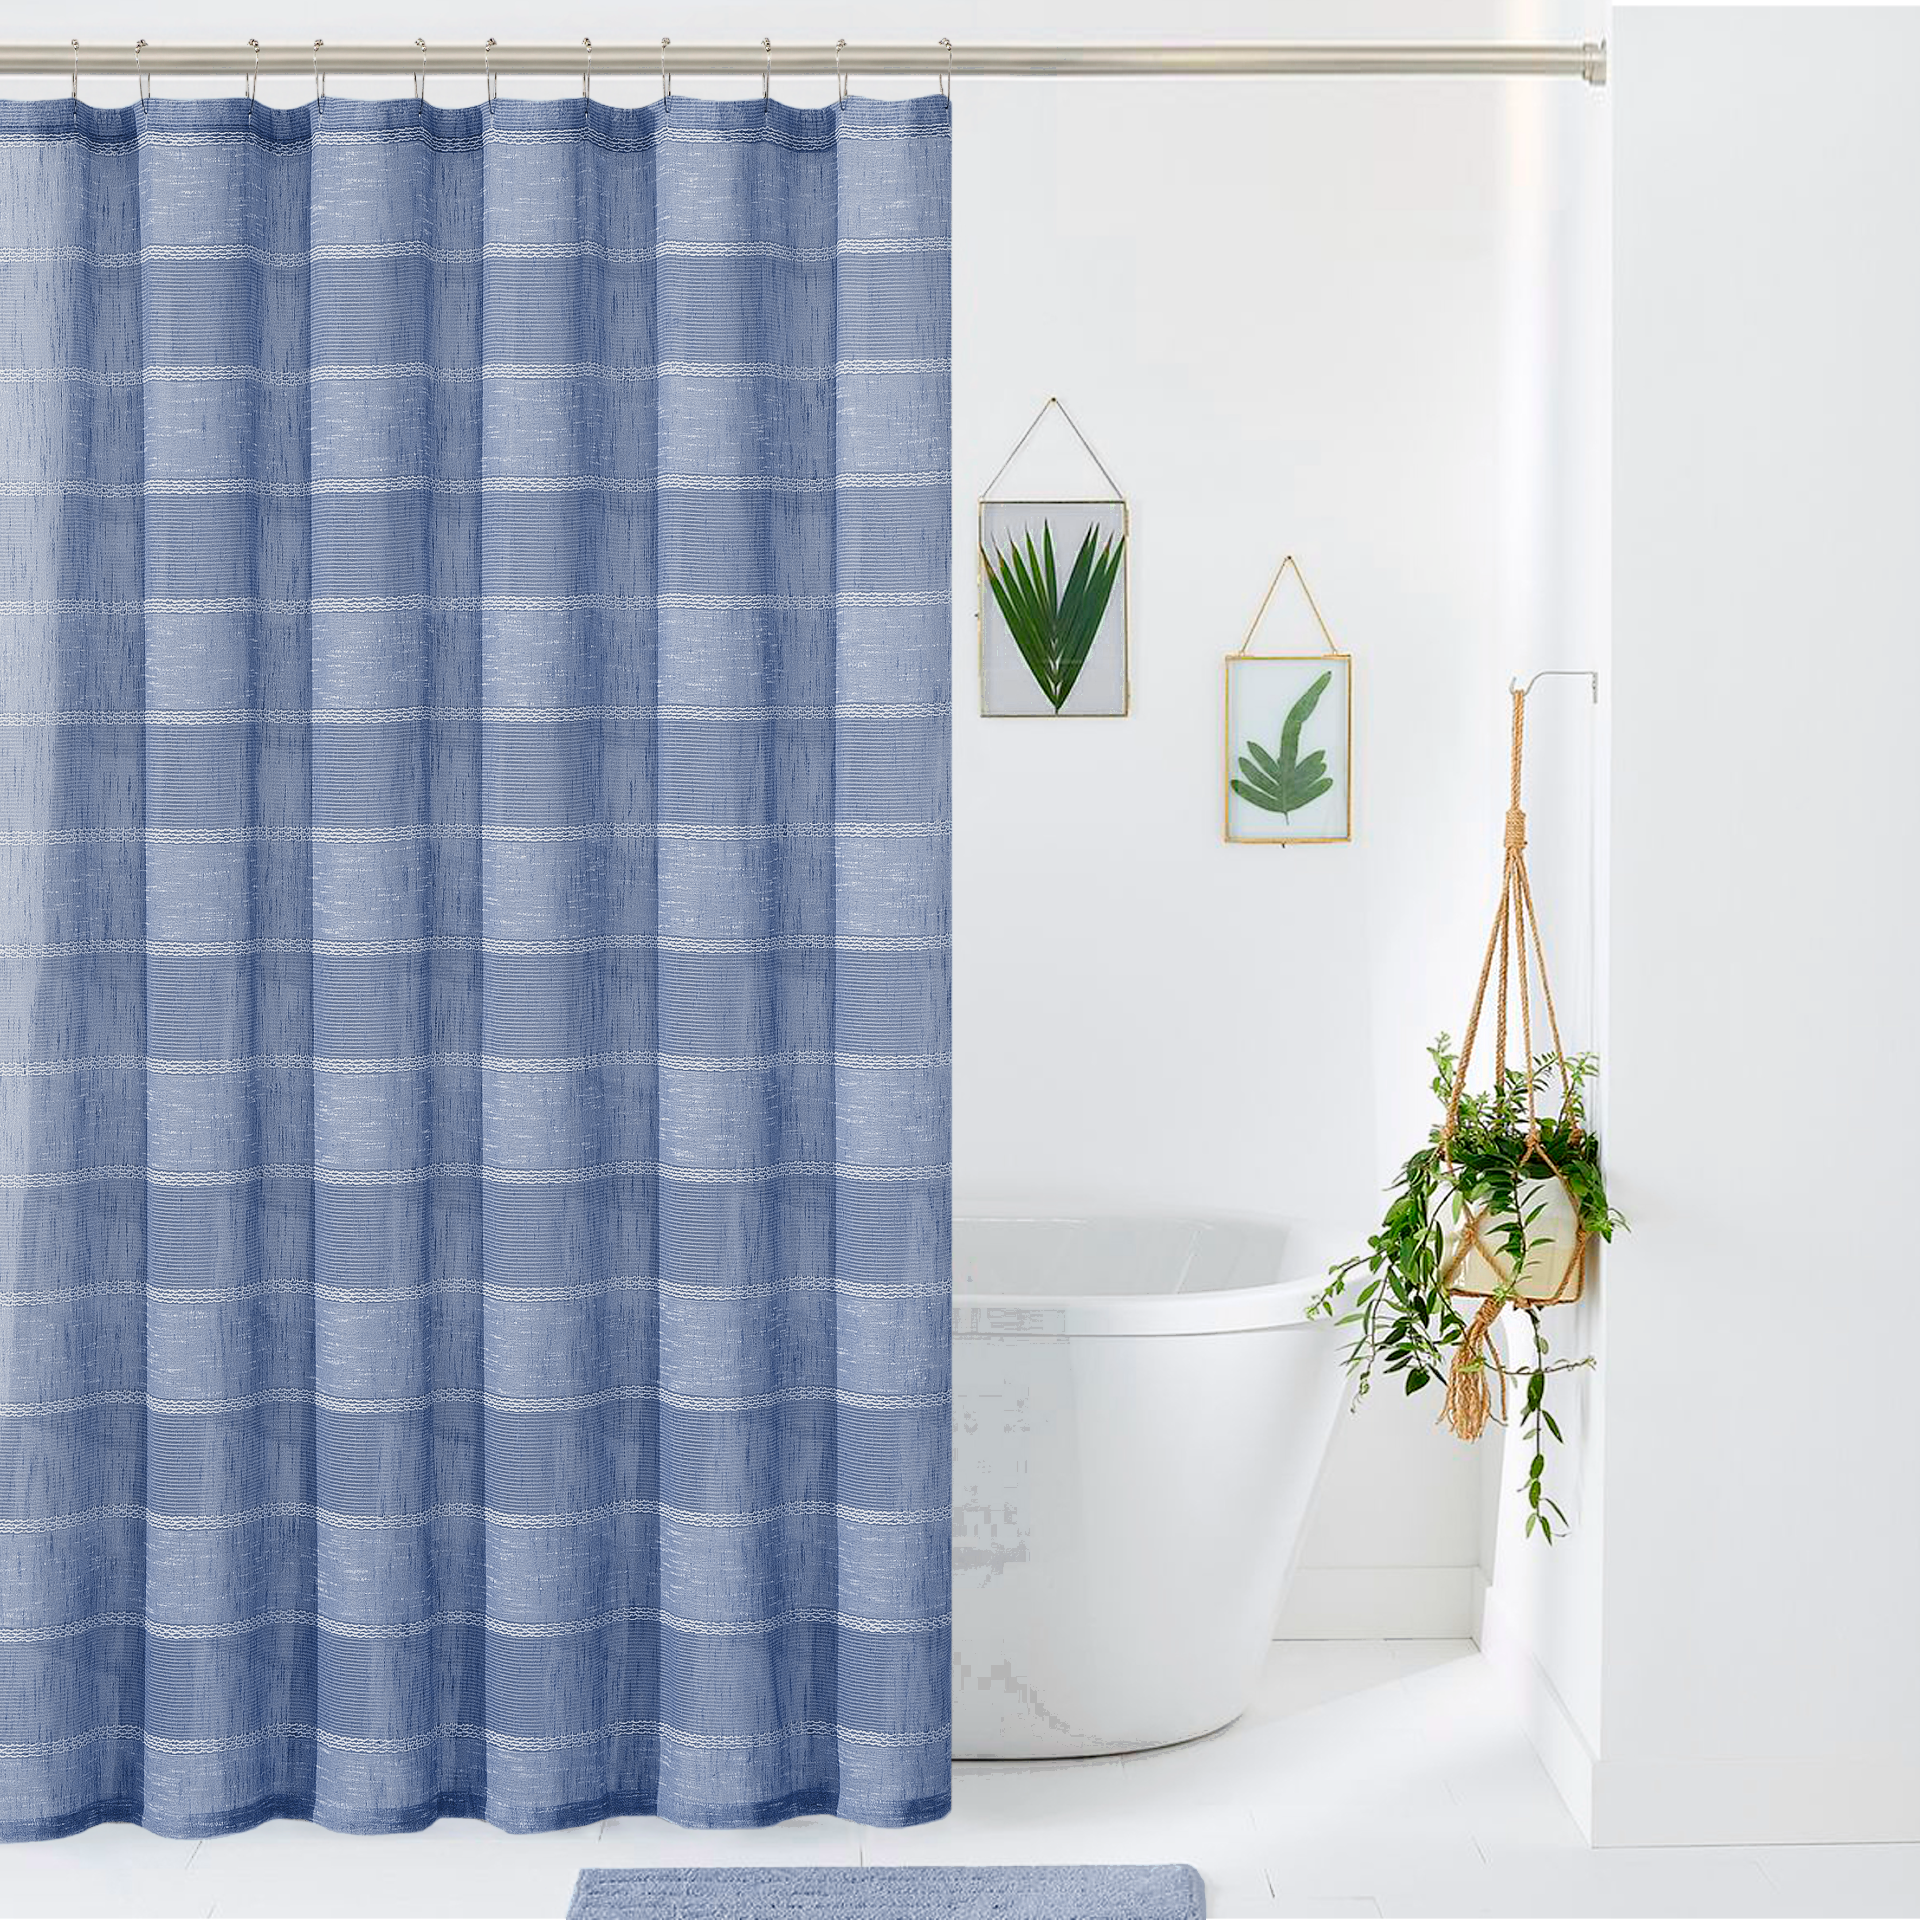 Dainty Home Megan 3D Linen Textured Linen Look Chenille Striped Designed Fabric Shower Curtain